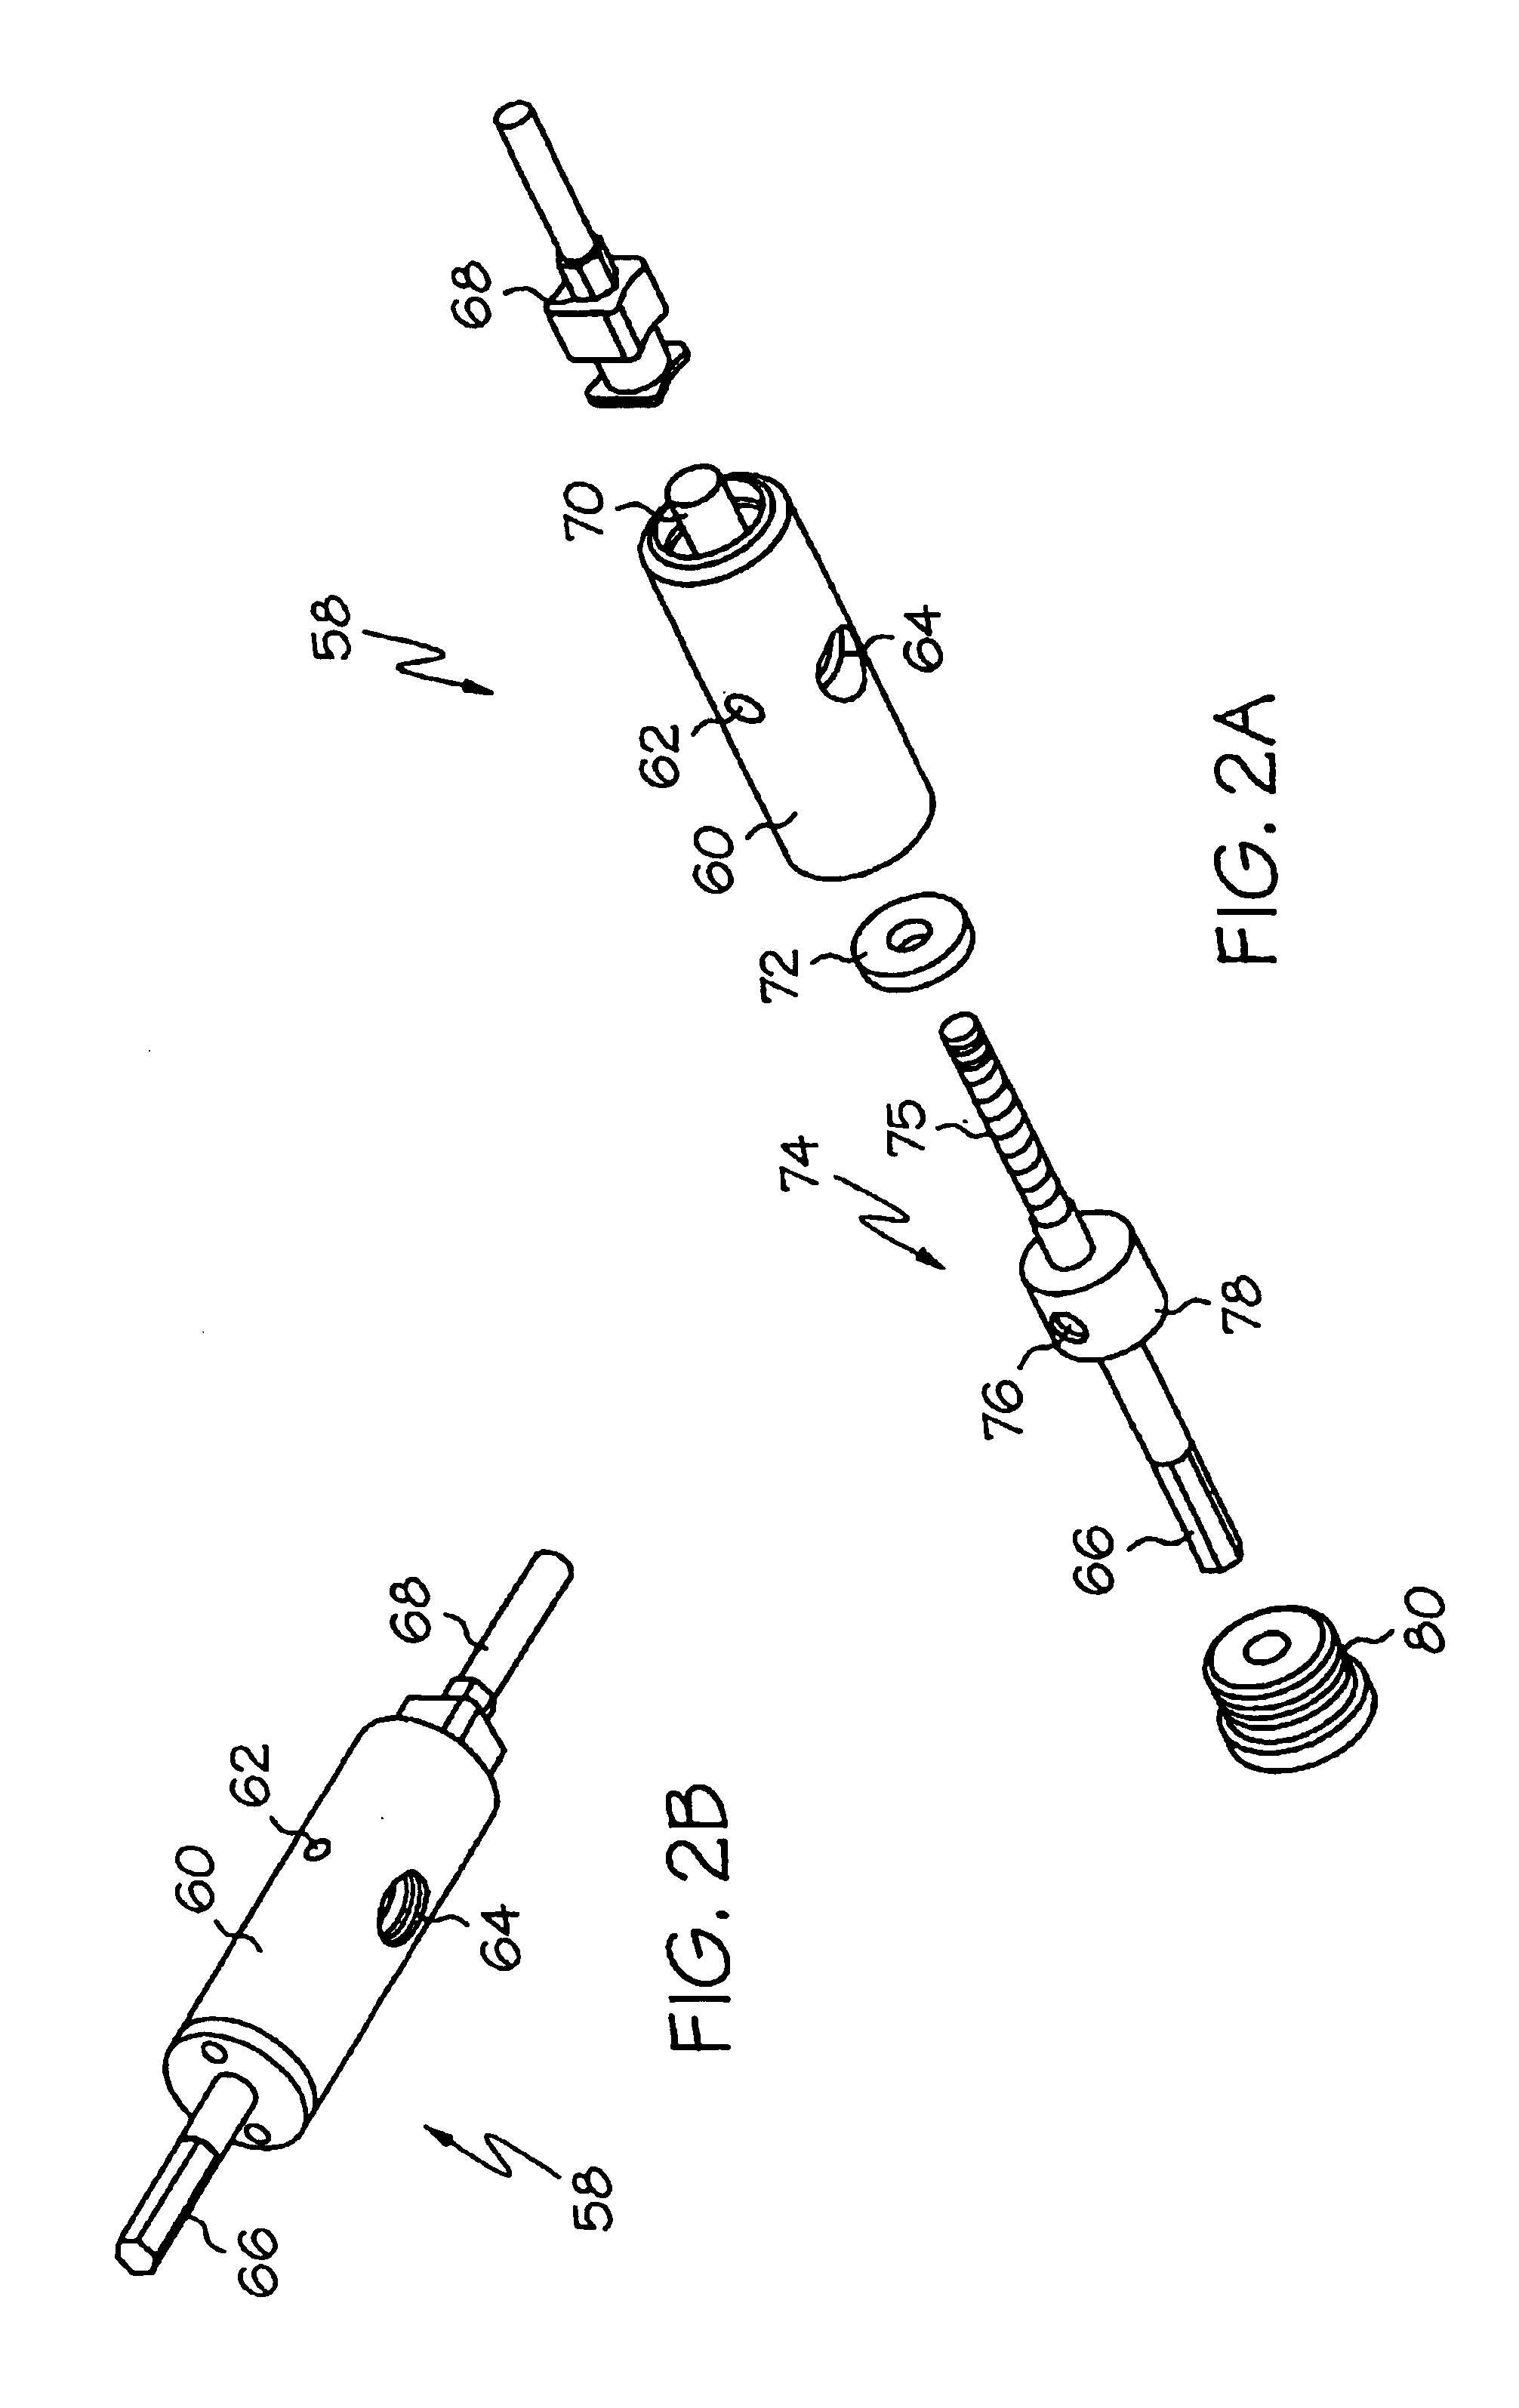 Fluid pump and cartridge